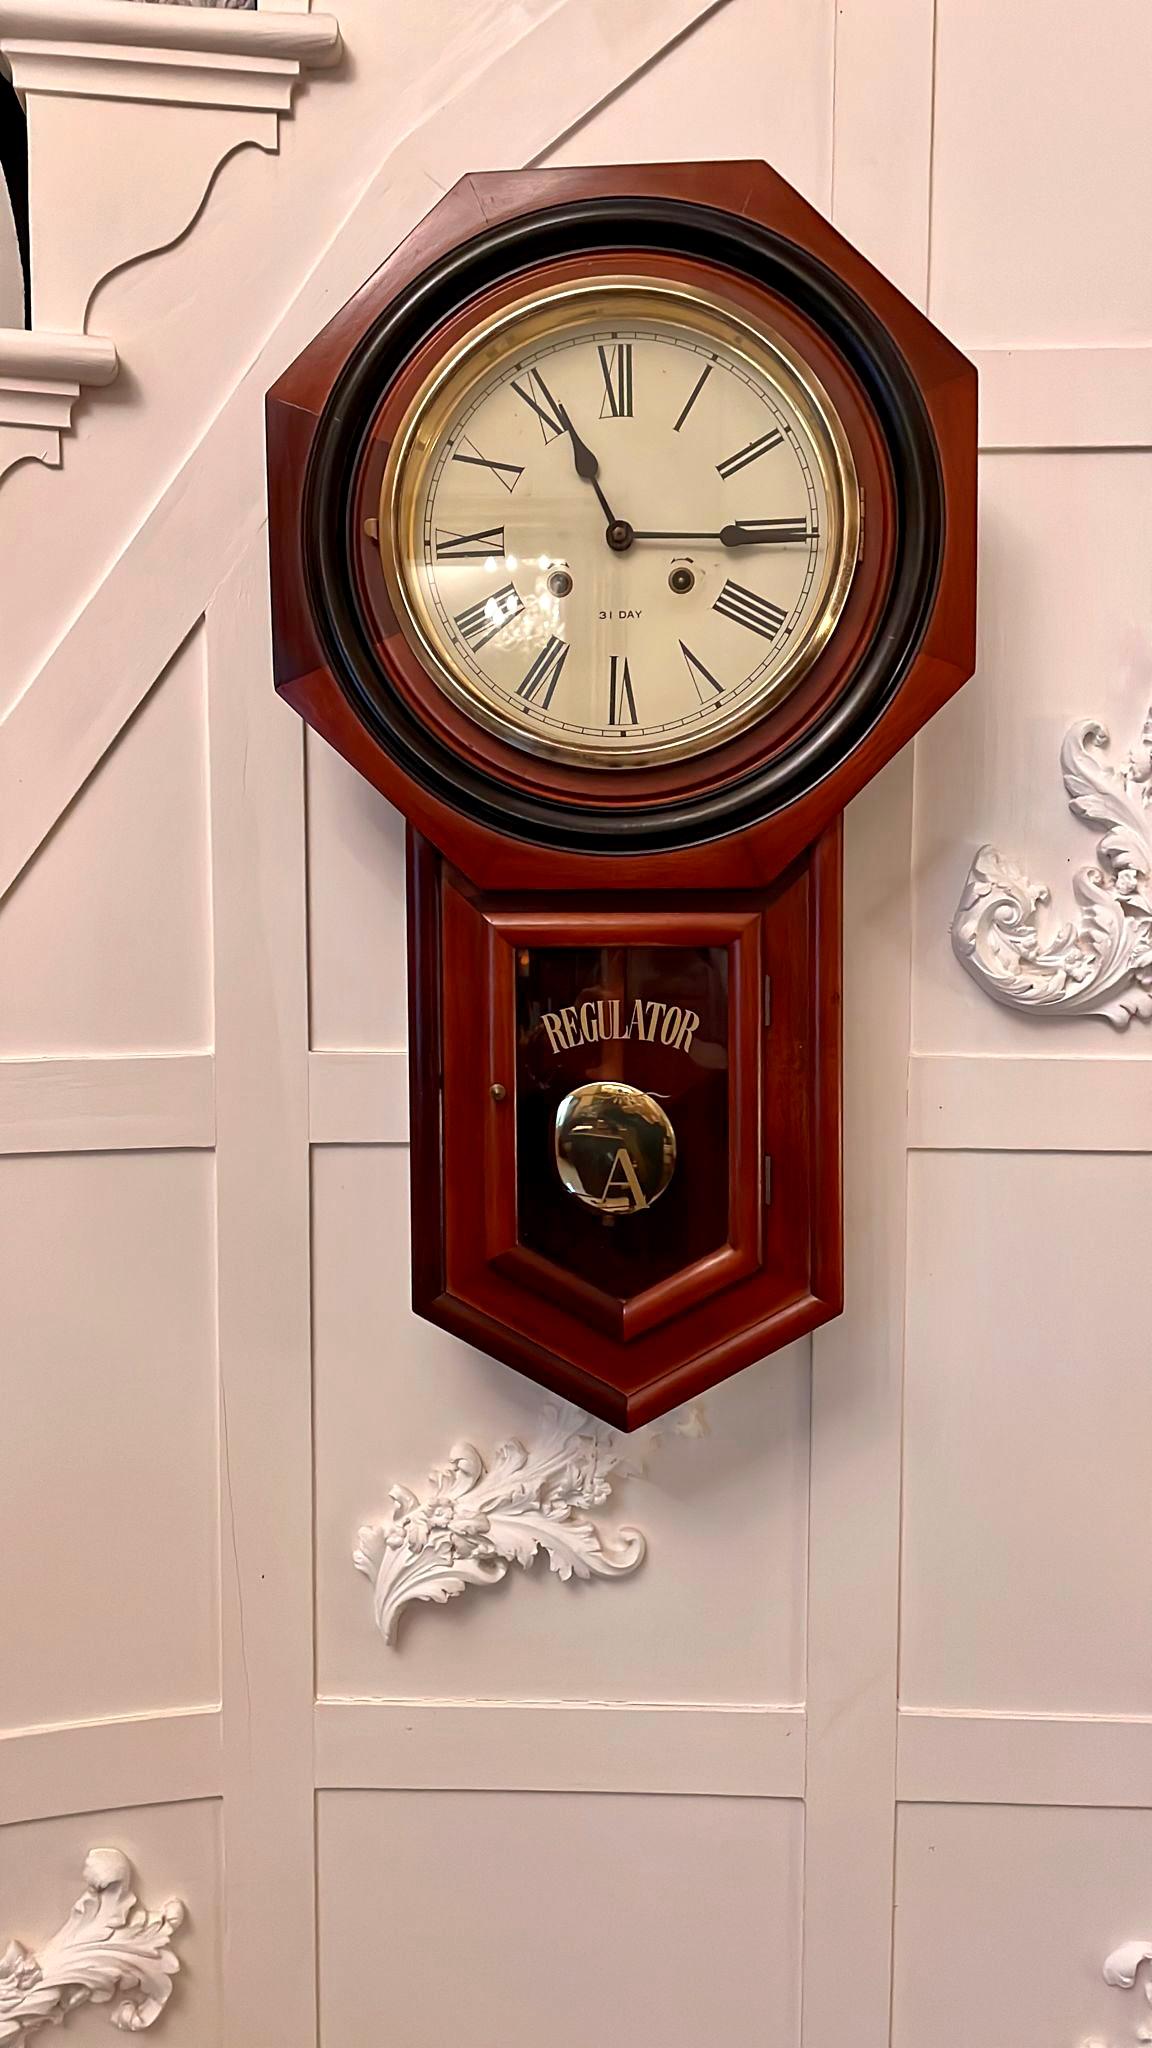 Unusual antique Victorian 31 day regulator wall clock having a circular glazed door with brass bezel enclosing white dial with Roman numerals and original hands, twin train movement, a smaller glazed door below, original pendulum and key.

In